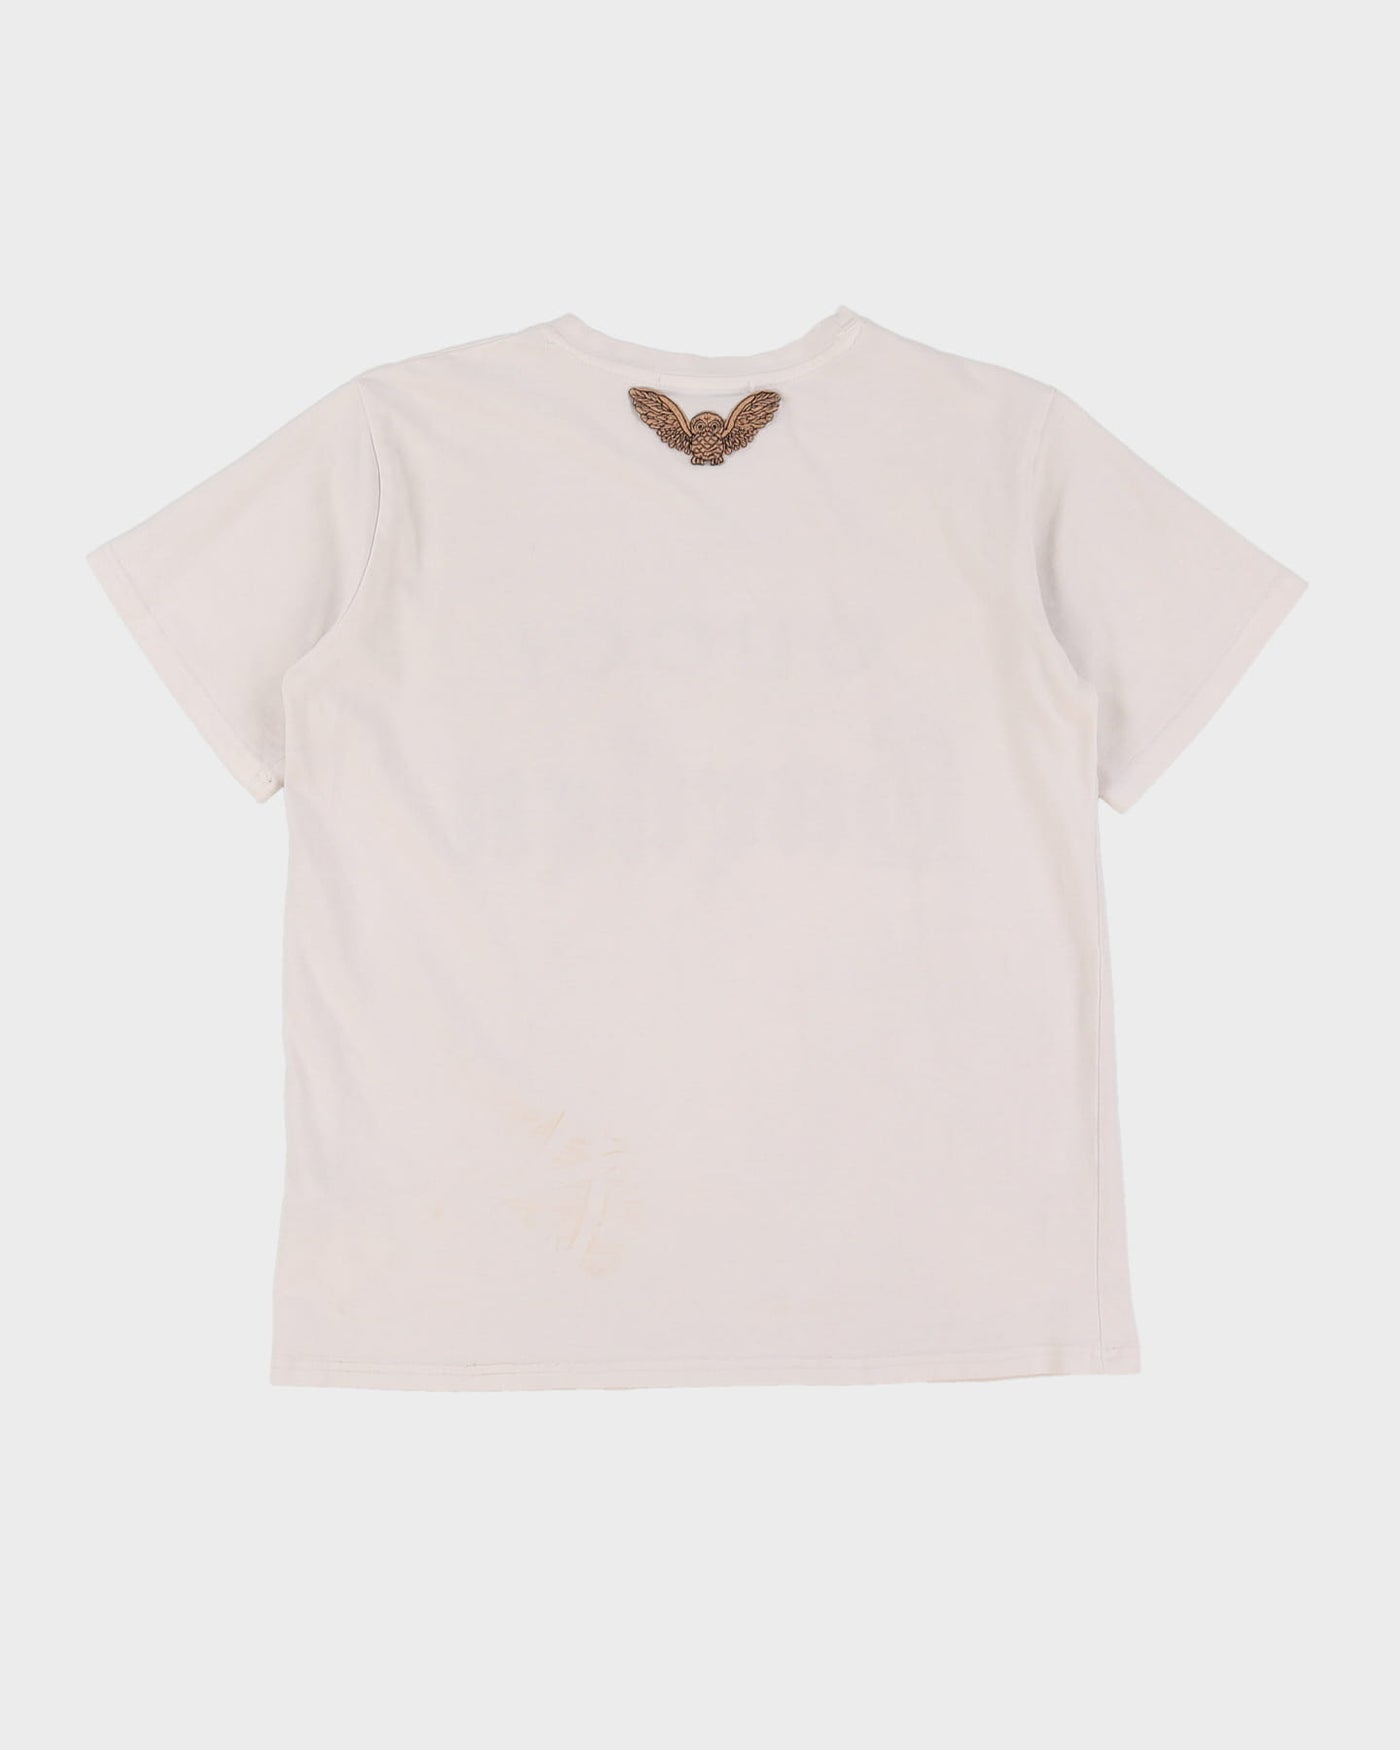 Gucci Garden White T-Shirt - XL